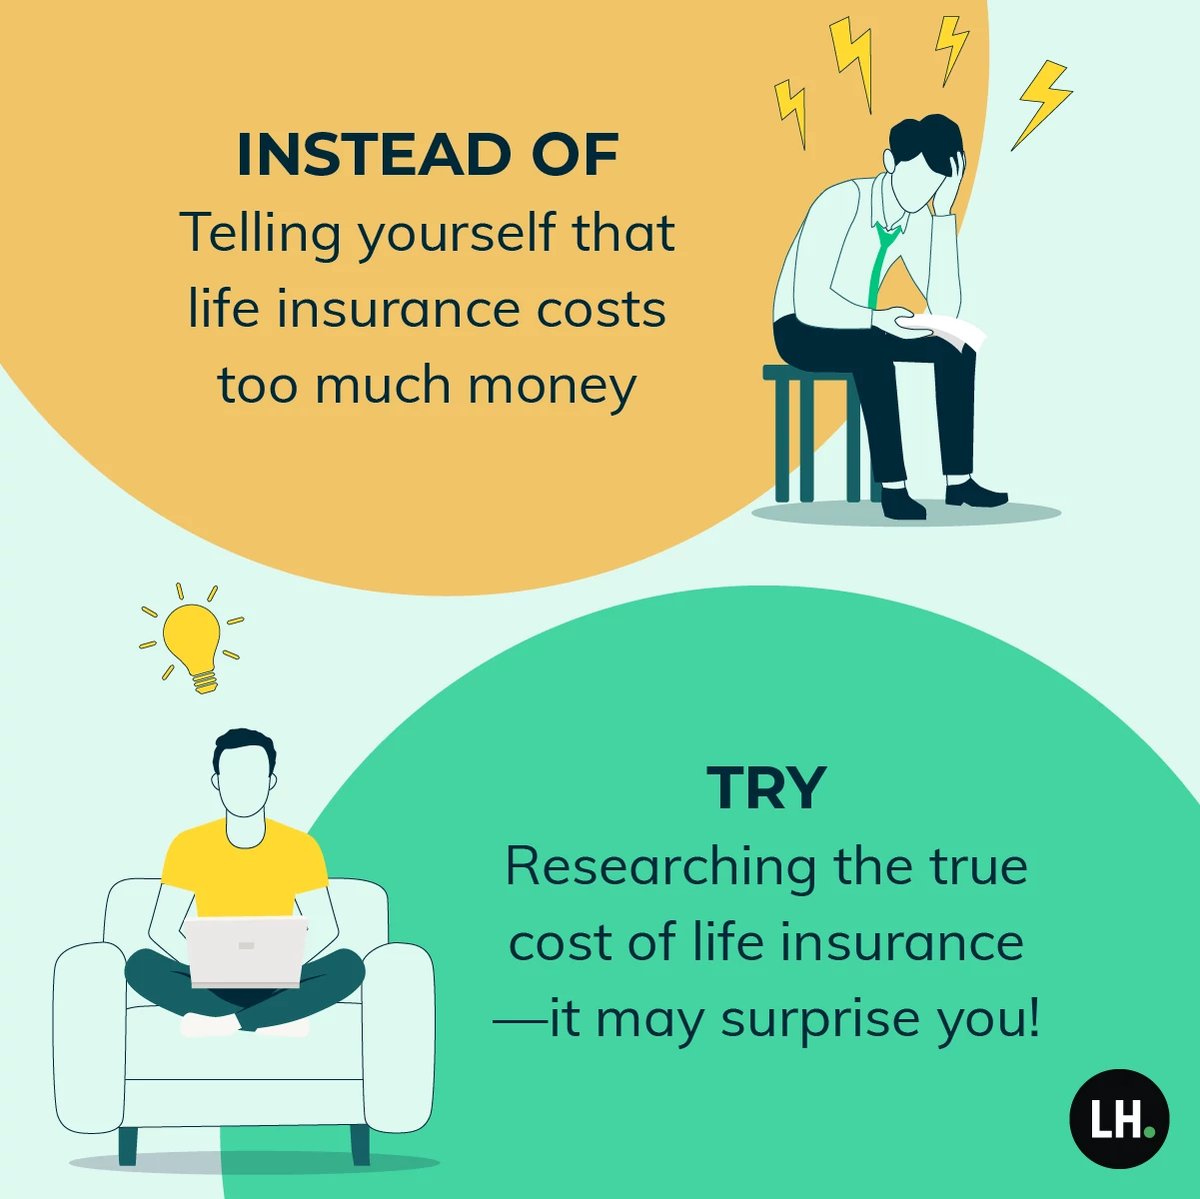 #LifeInsurance may be more affordable than you think!
#LIRP #TermLifeInsurance #LTChybrid #LTC #FinalExpense #FinancialMarketsInc